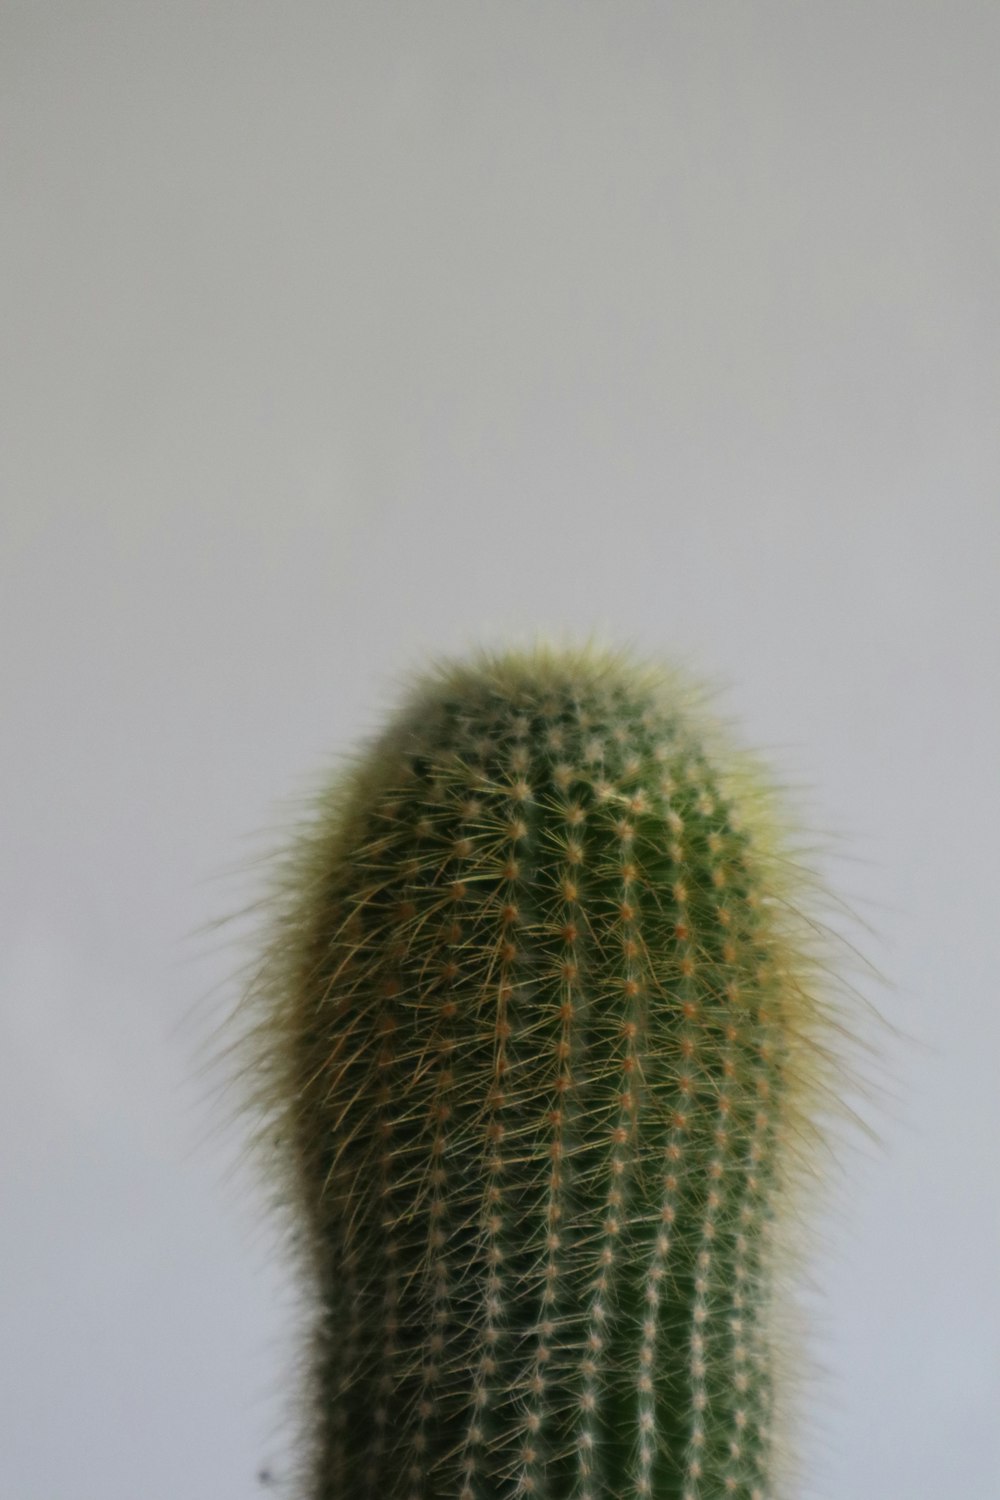 a close up of a cactus